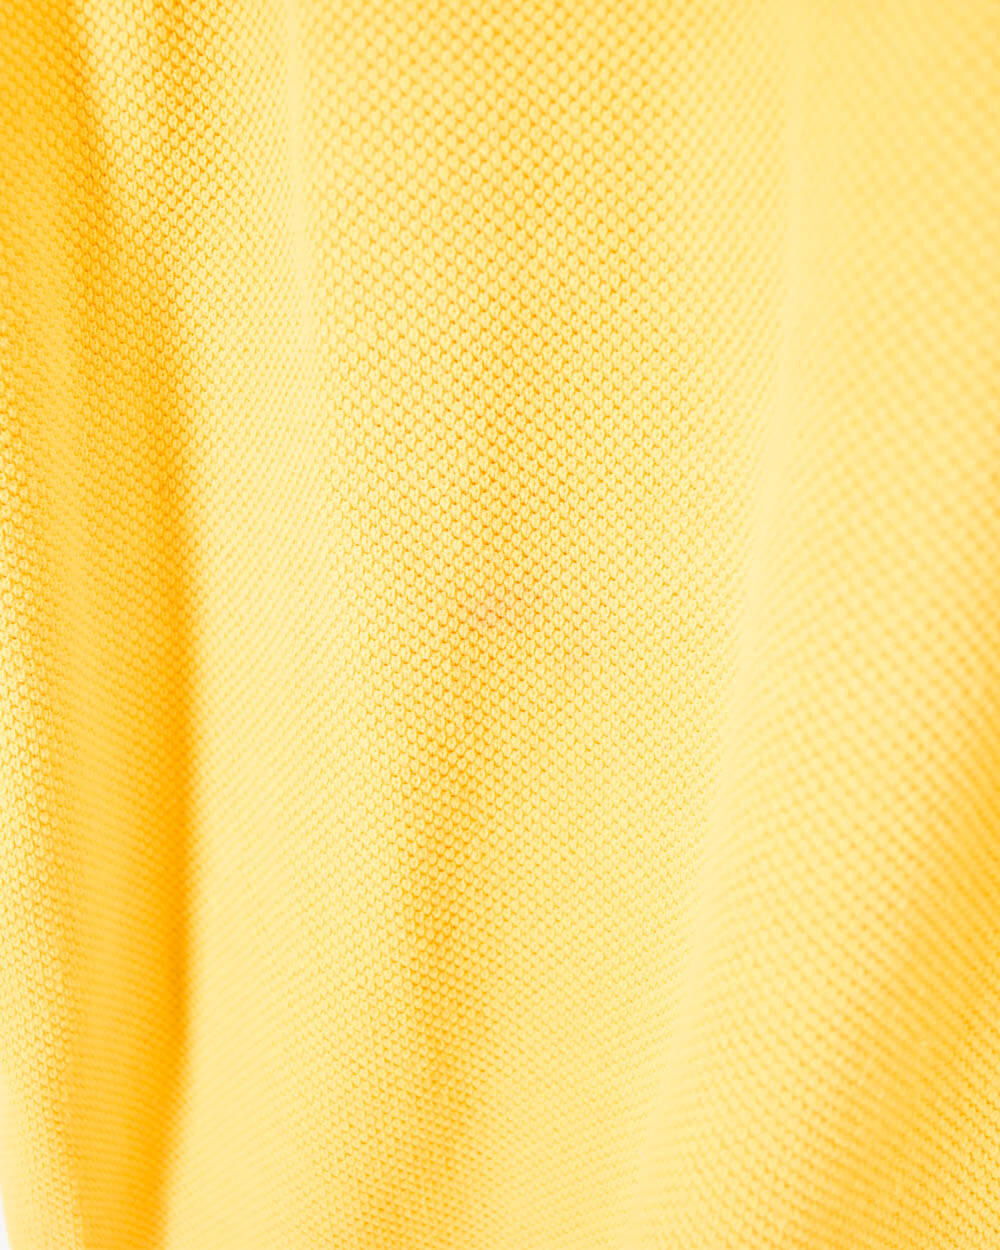 Yellow Reebok Polo Shirt - Small